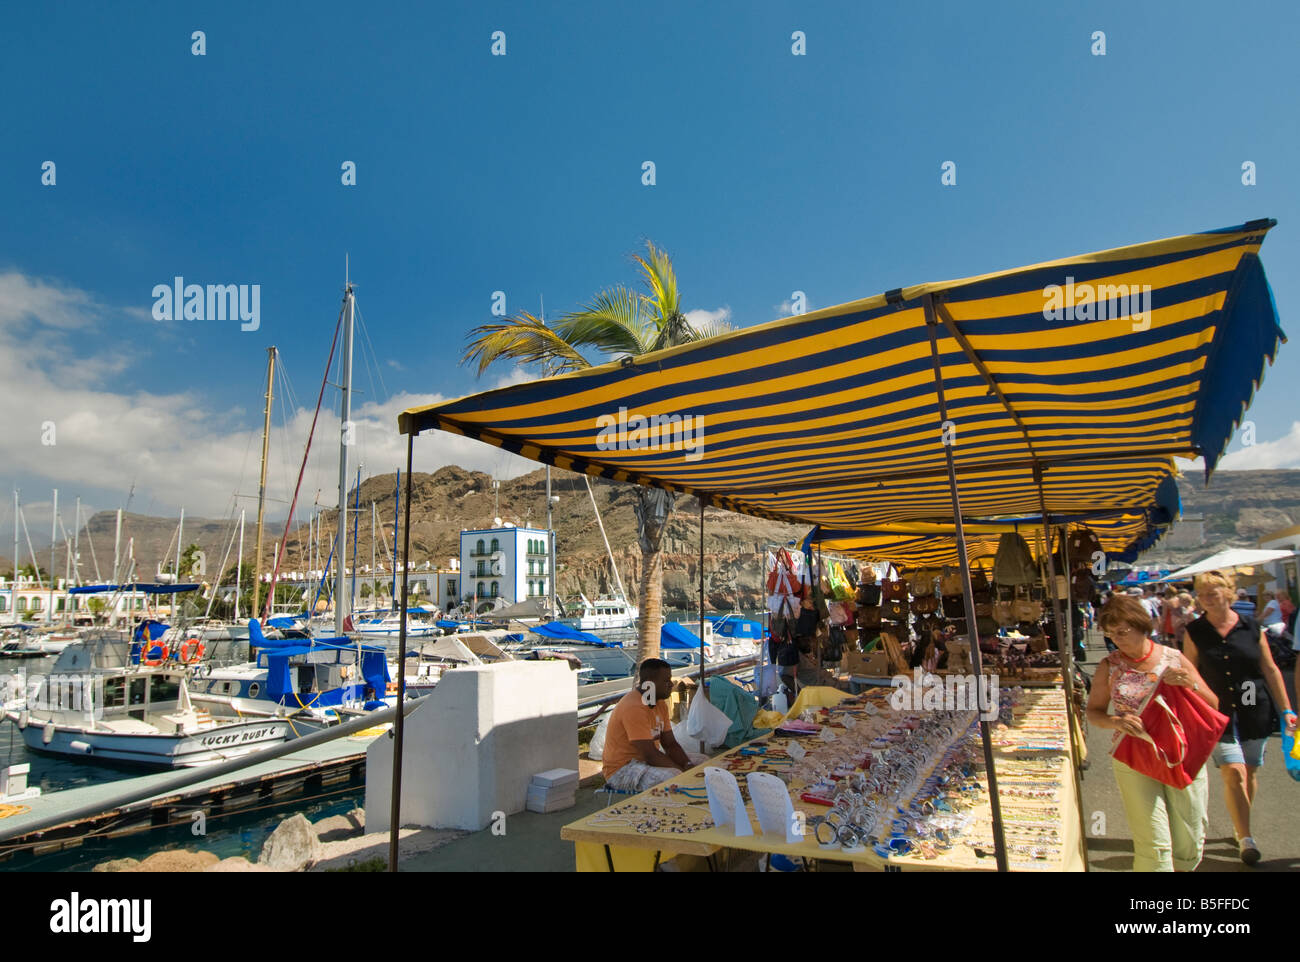 Market stall gran canaria fotografías e imágenes de alta resolución - Alamy